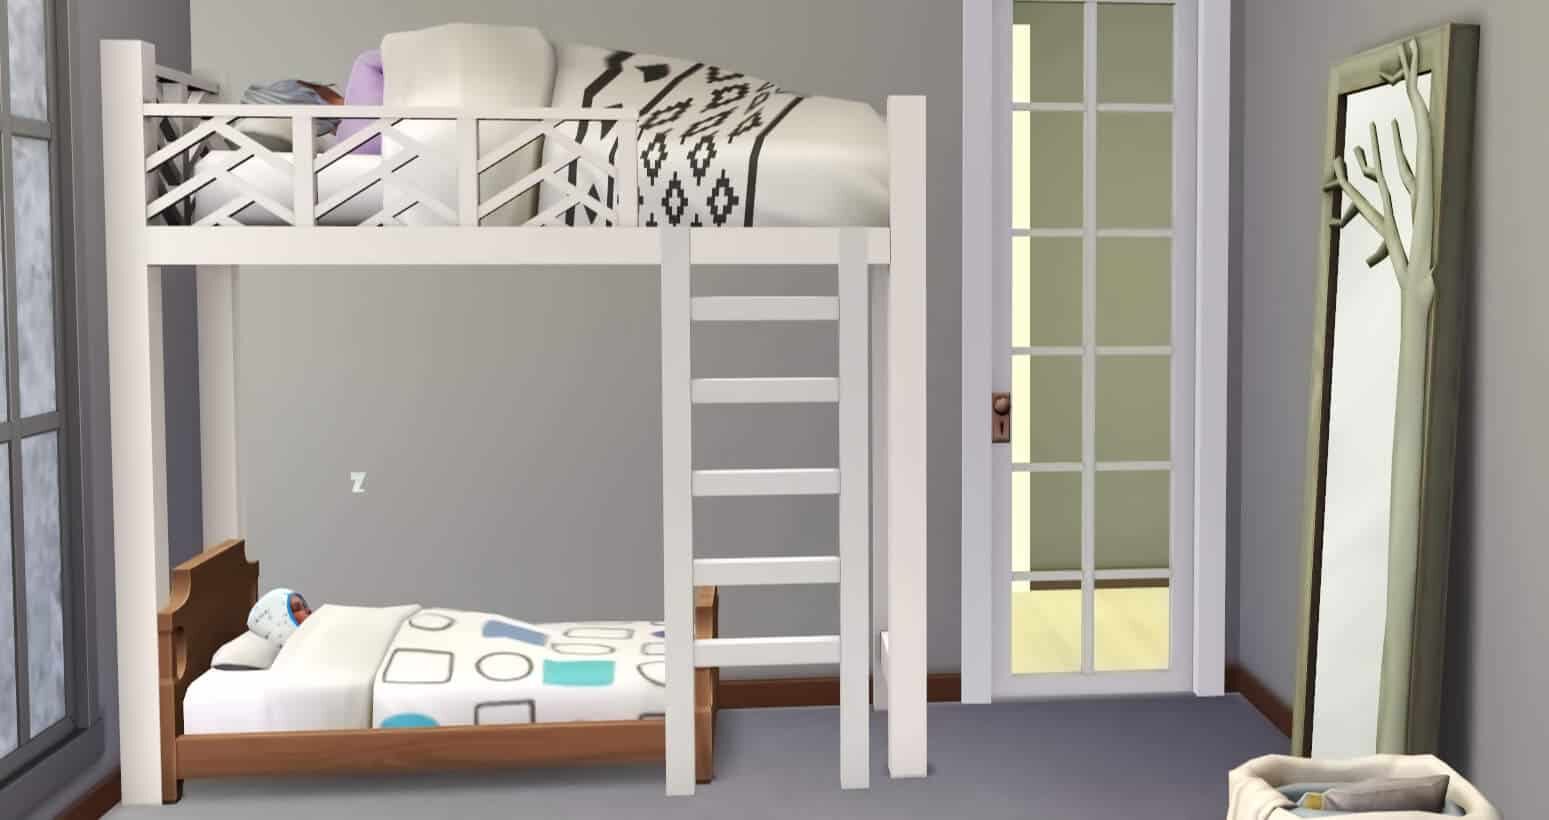 Sims 4 Functional Bunk Beds Cc